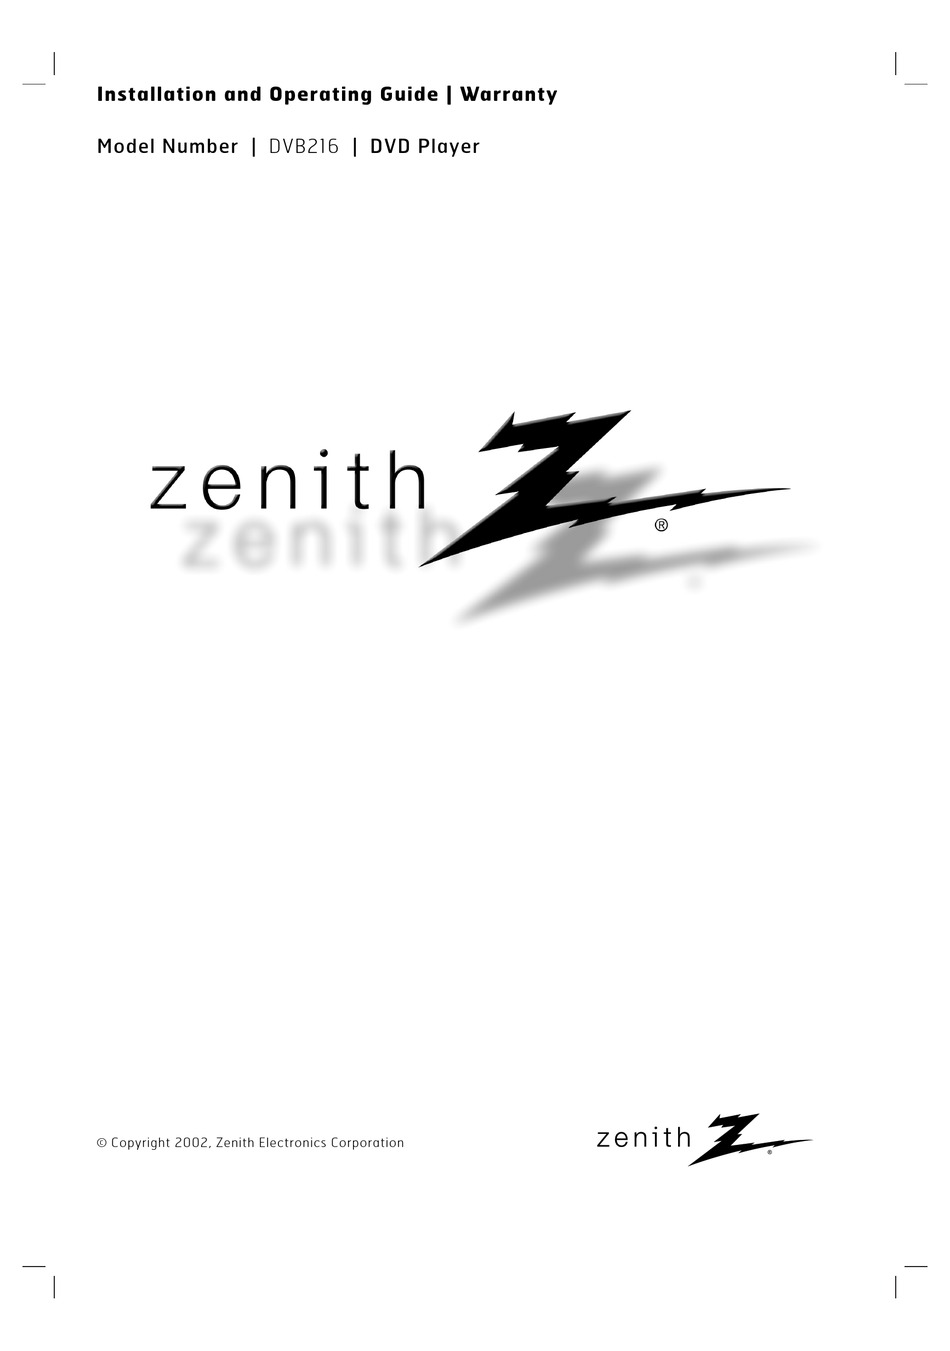 zenith disc error